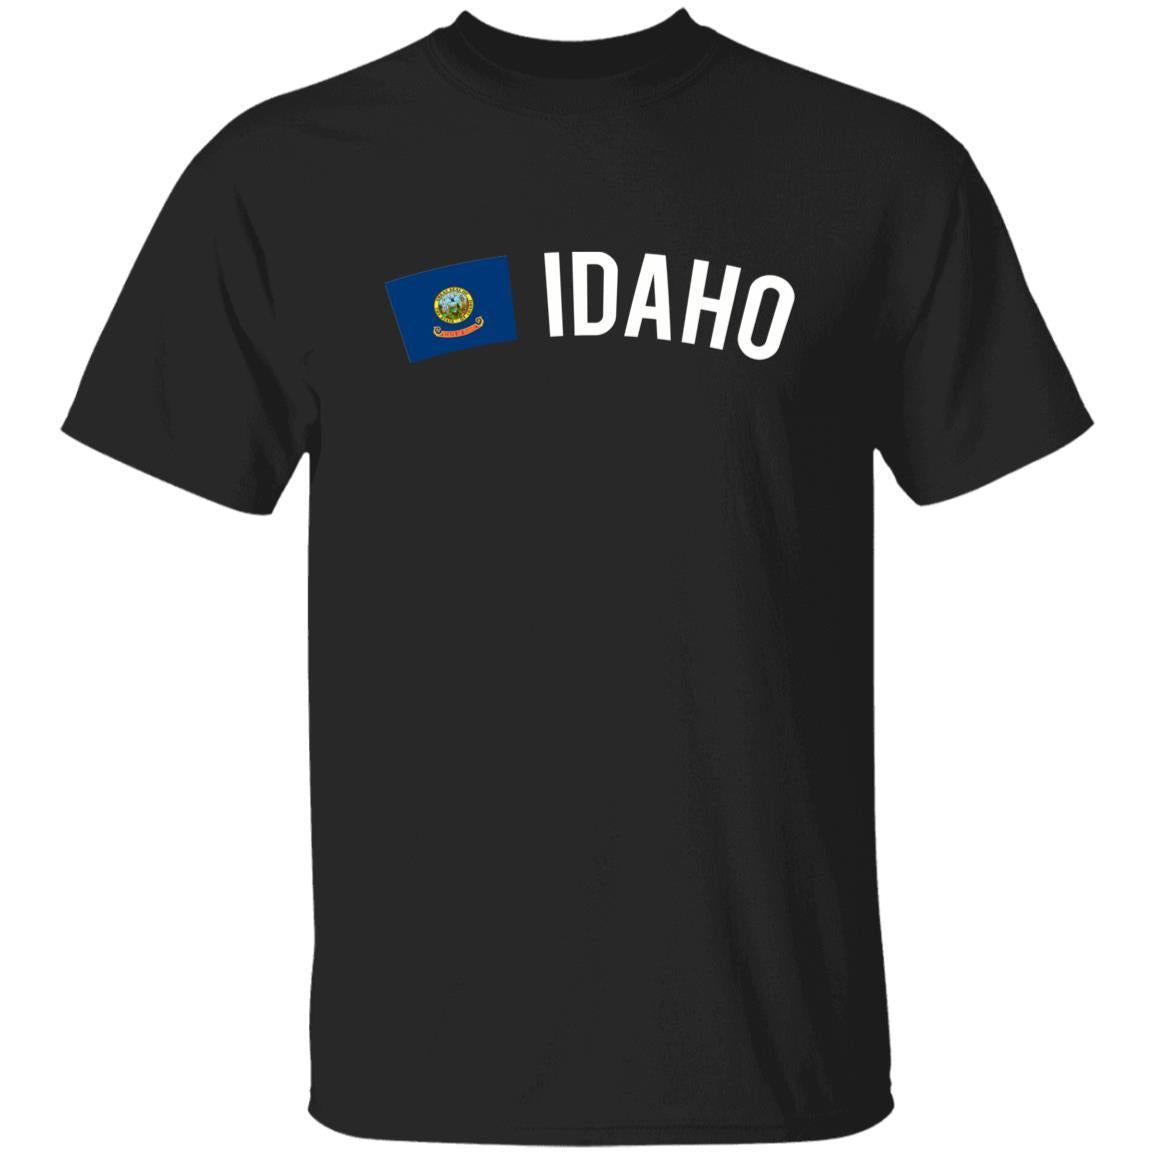 Idaho Unisex T-shirt gift Idaho flag tee Boise Meridian Nampa White Black-Family-Gift-Planet